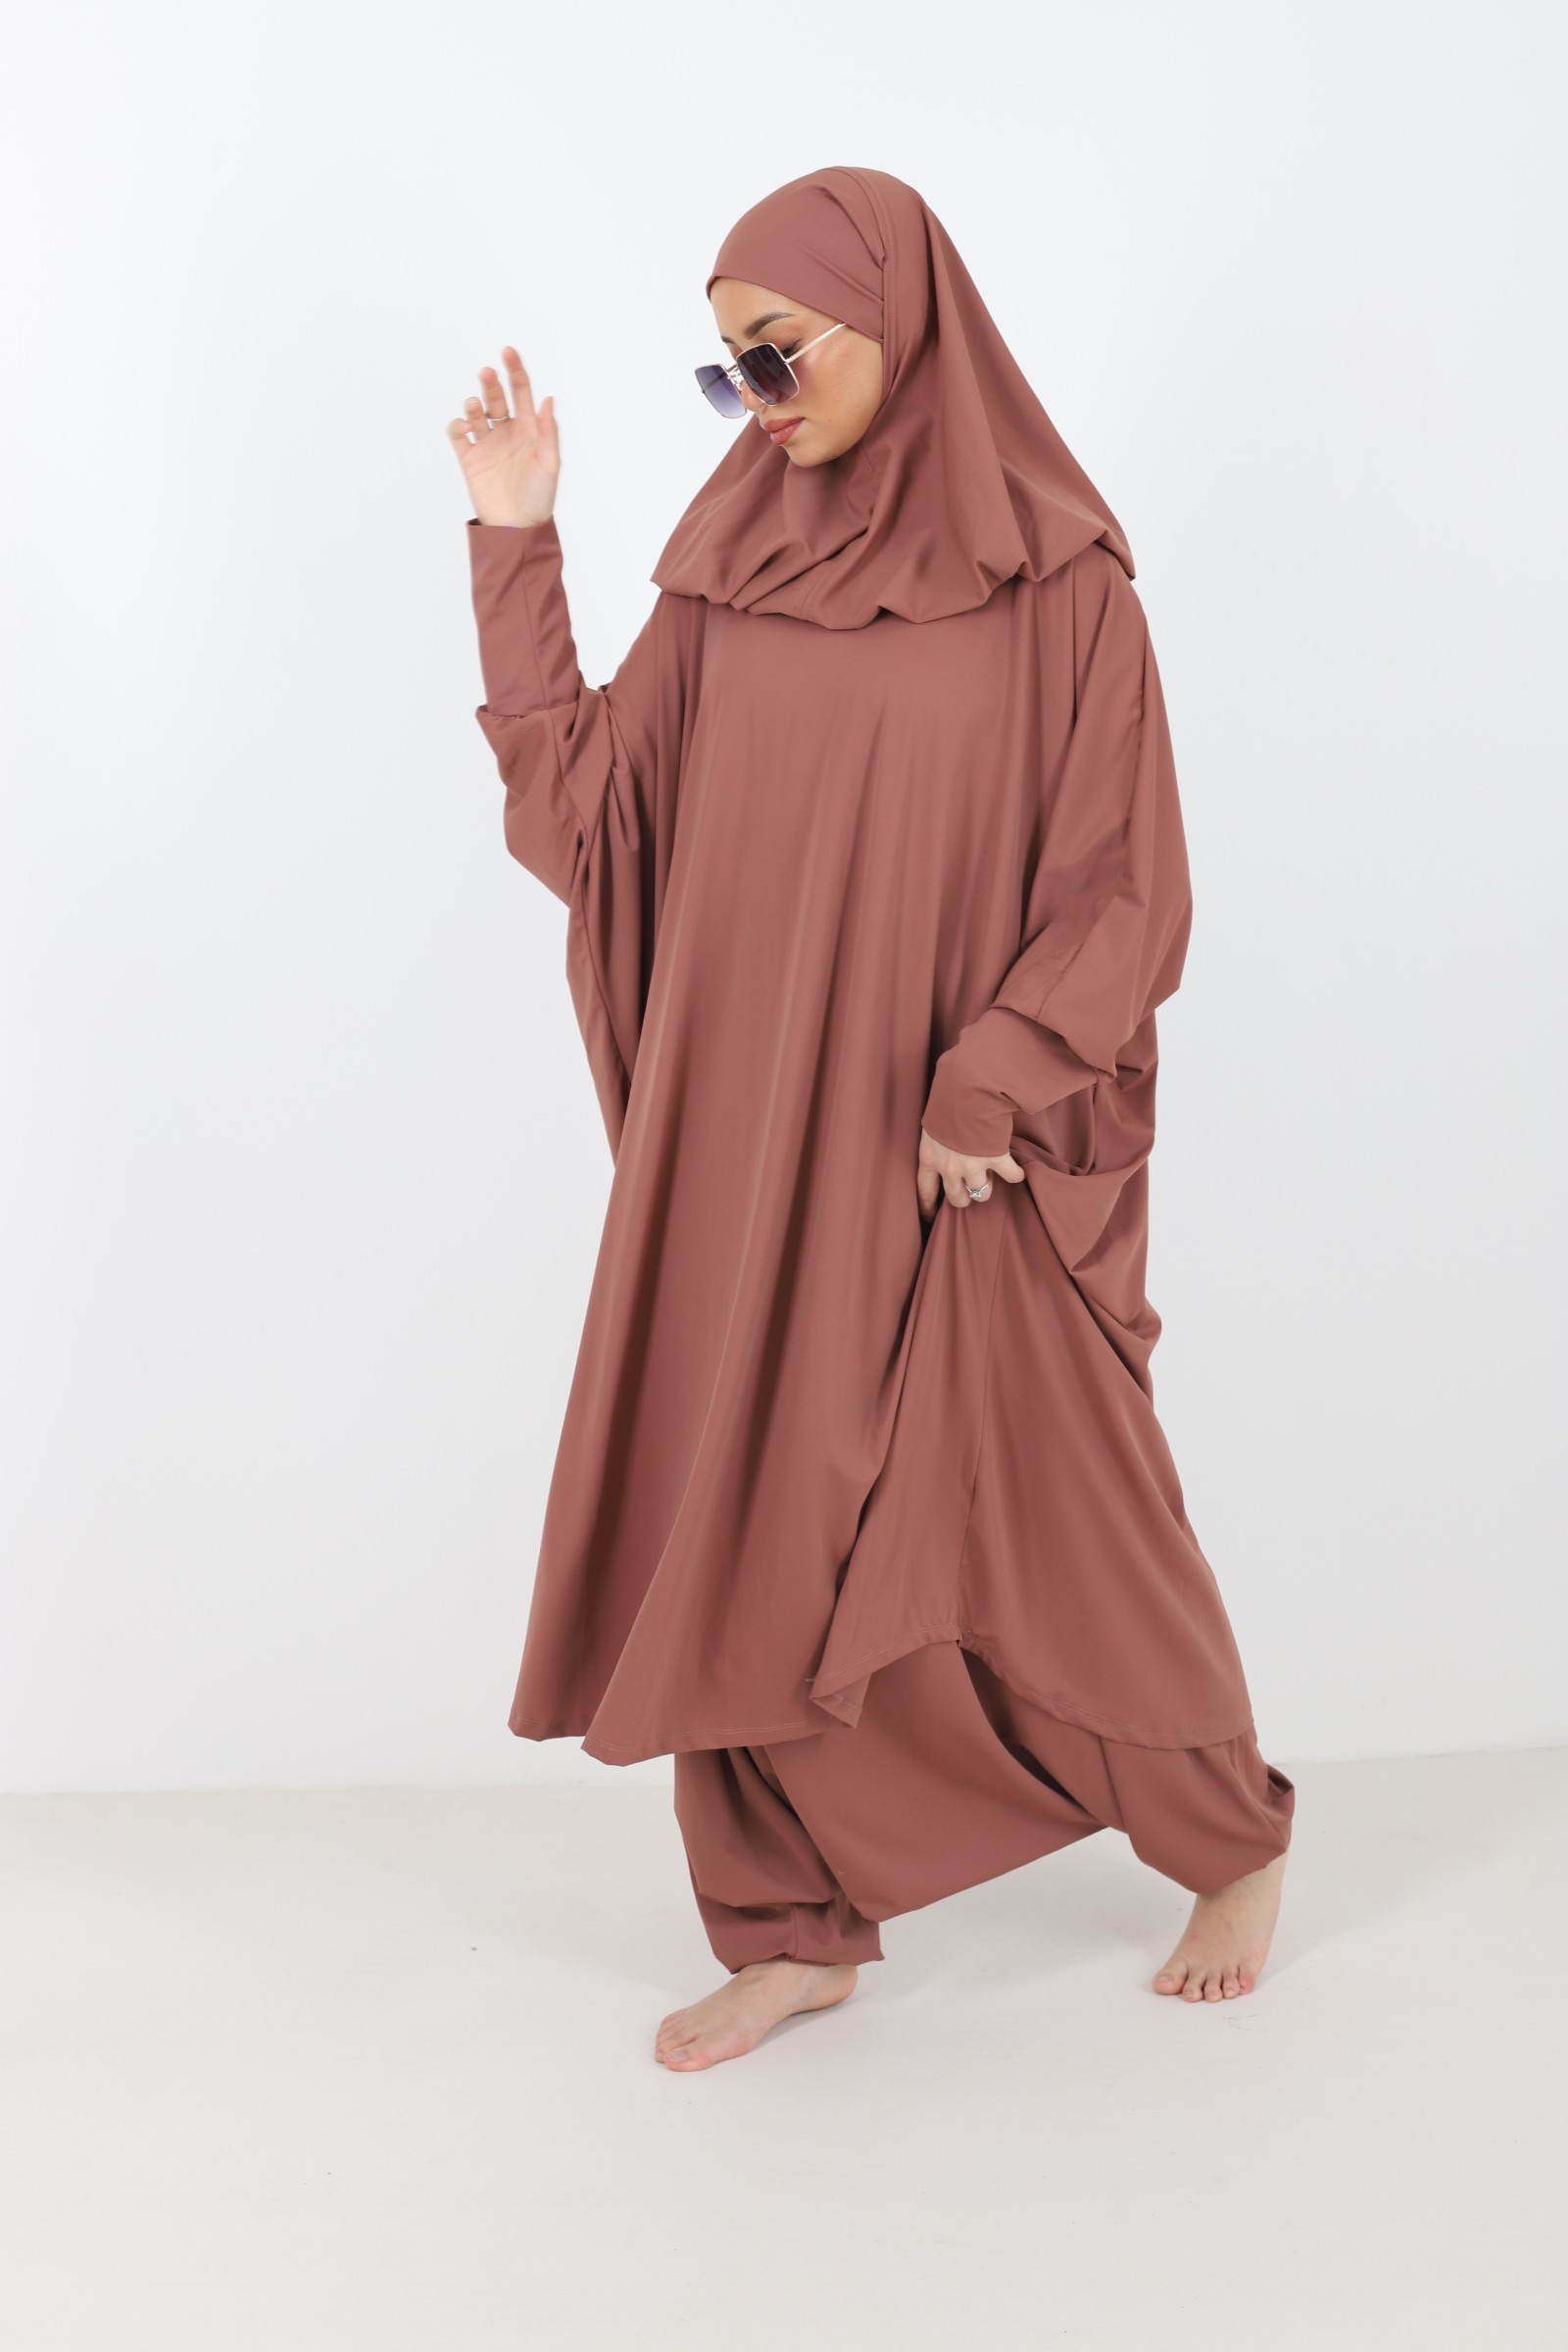 Jilbab de bain femme grande taille musulmane Burkini jilbab islamique